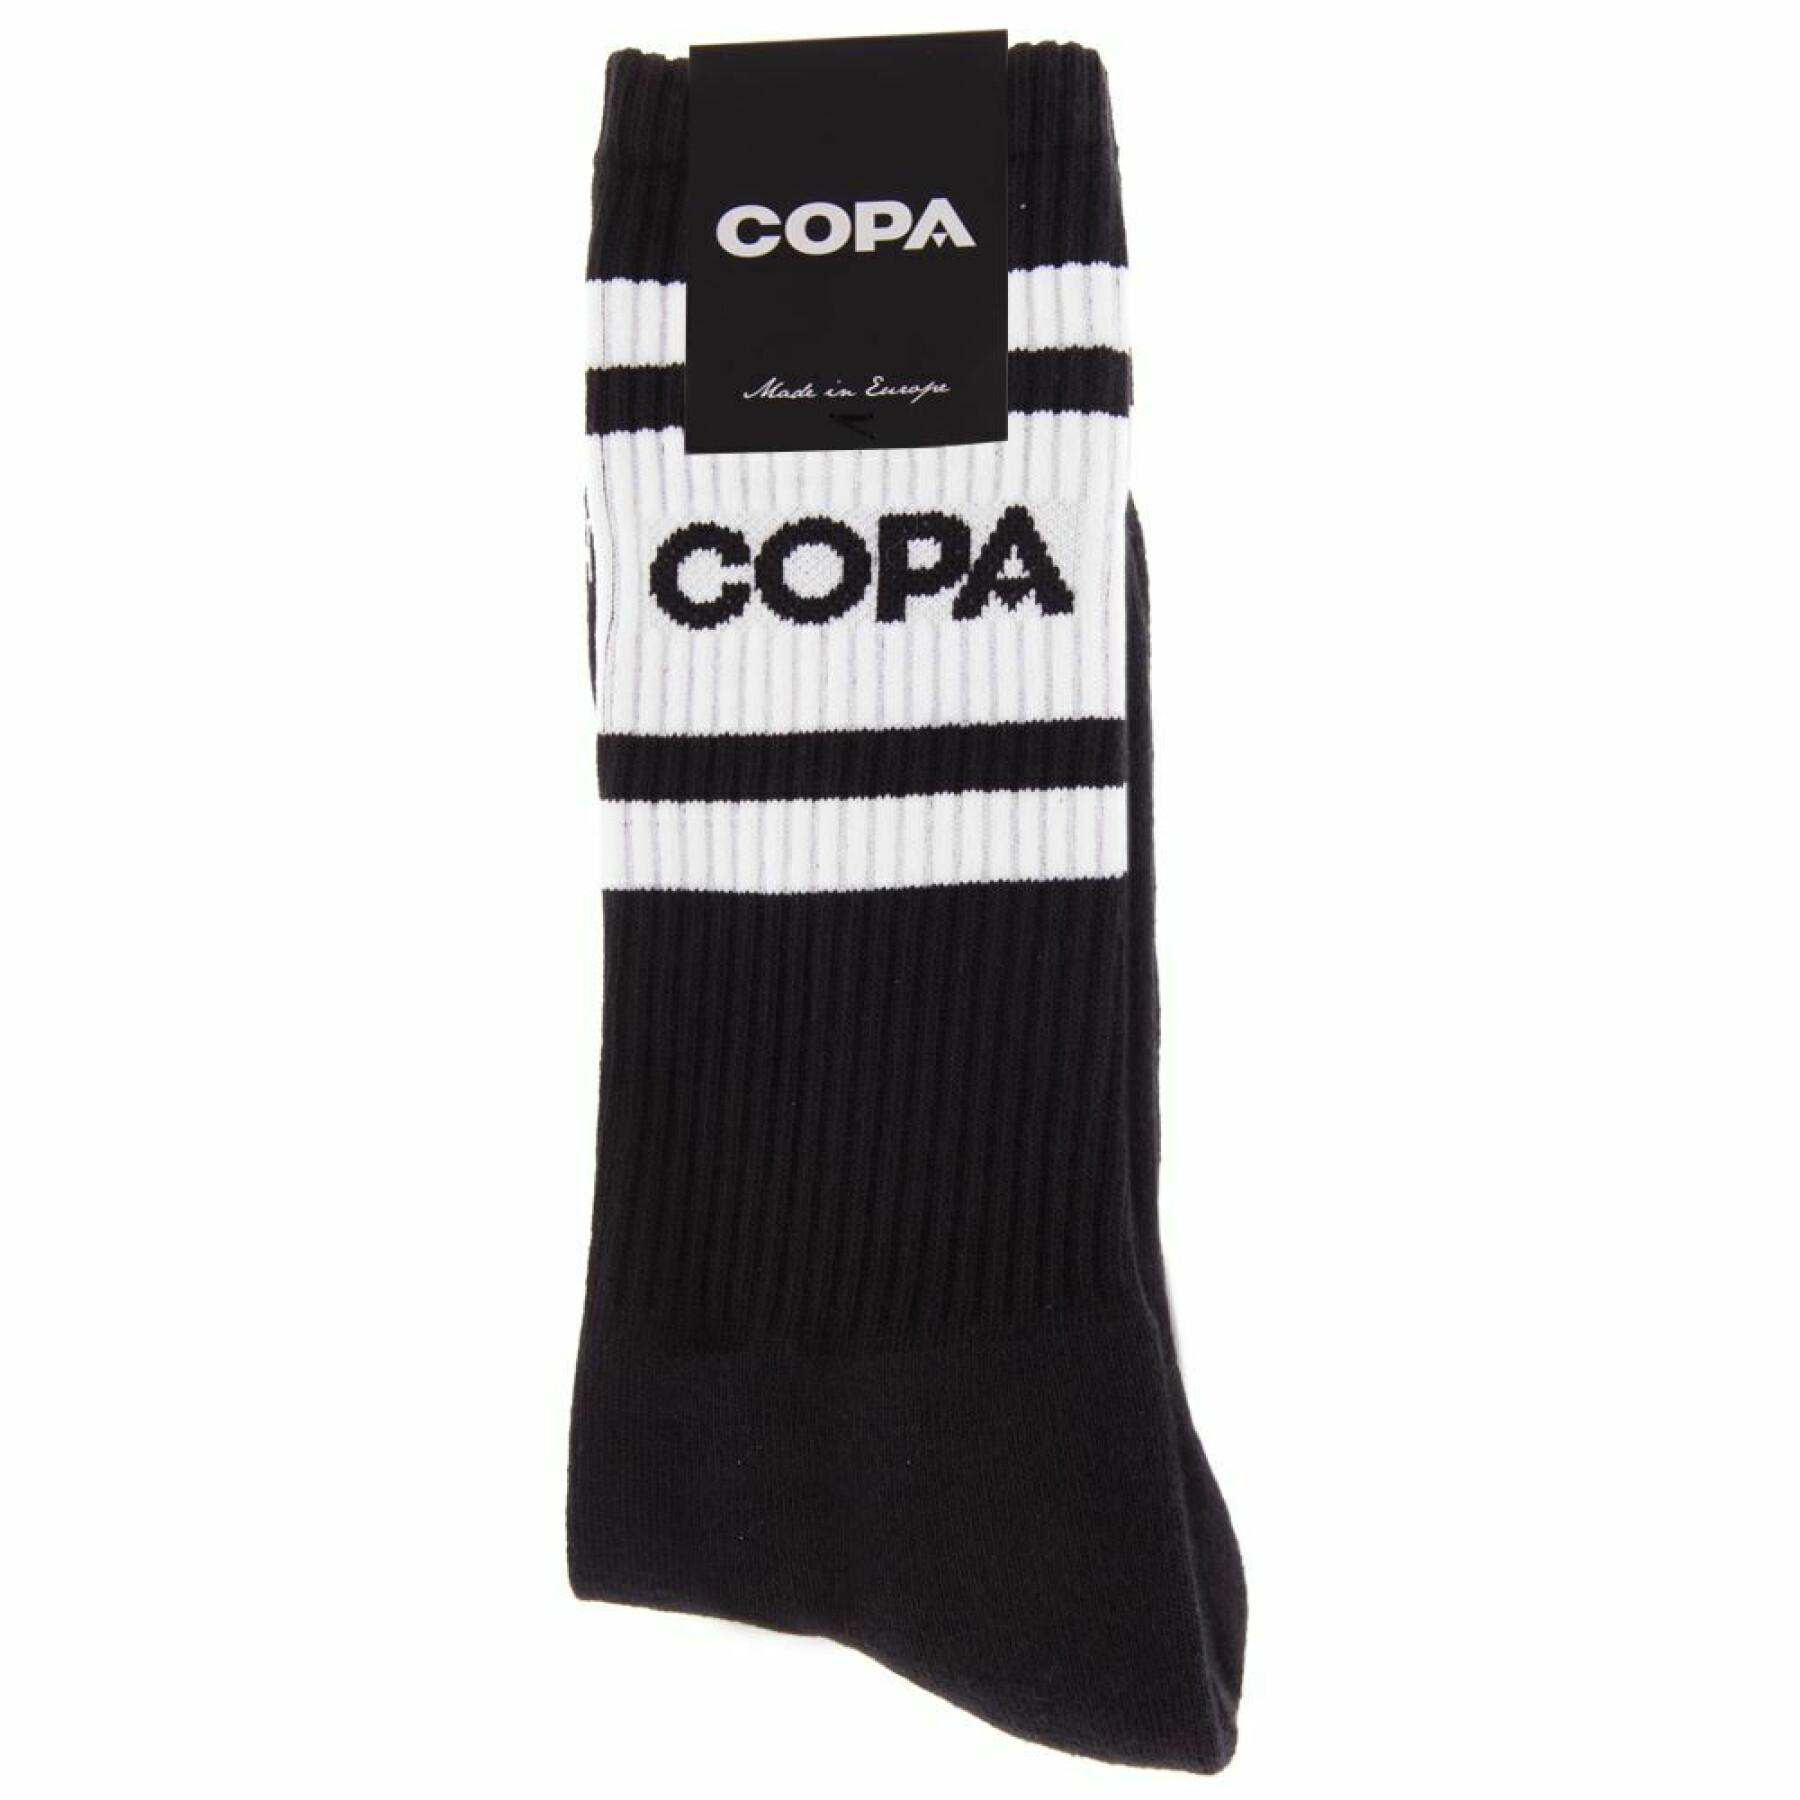 Socks Copa Terry